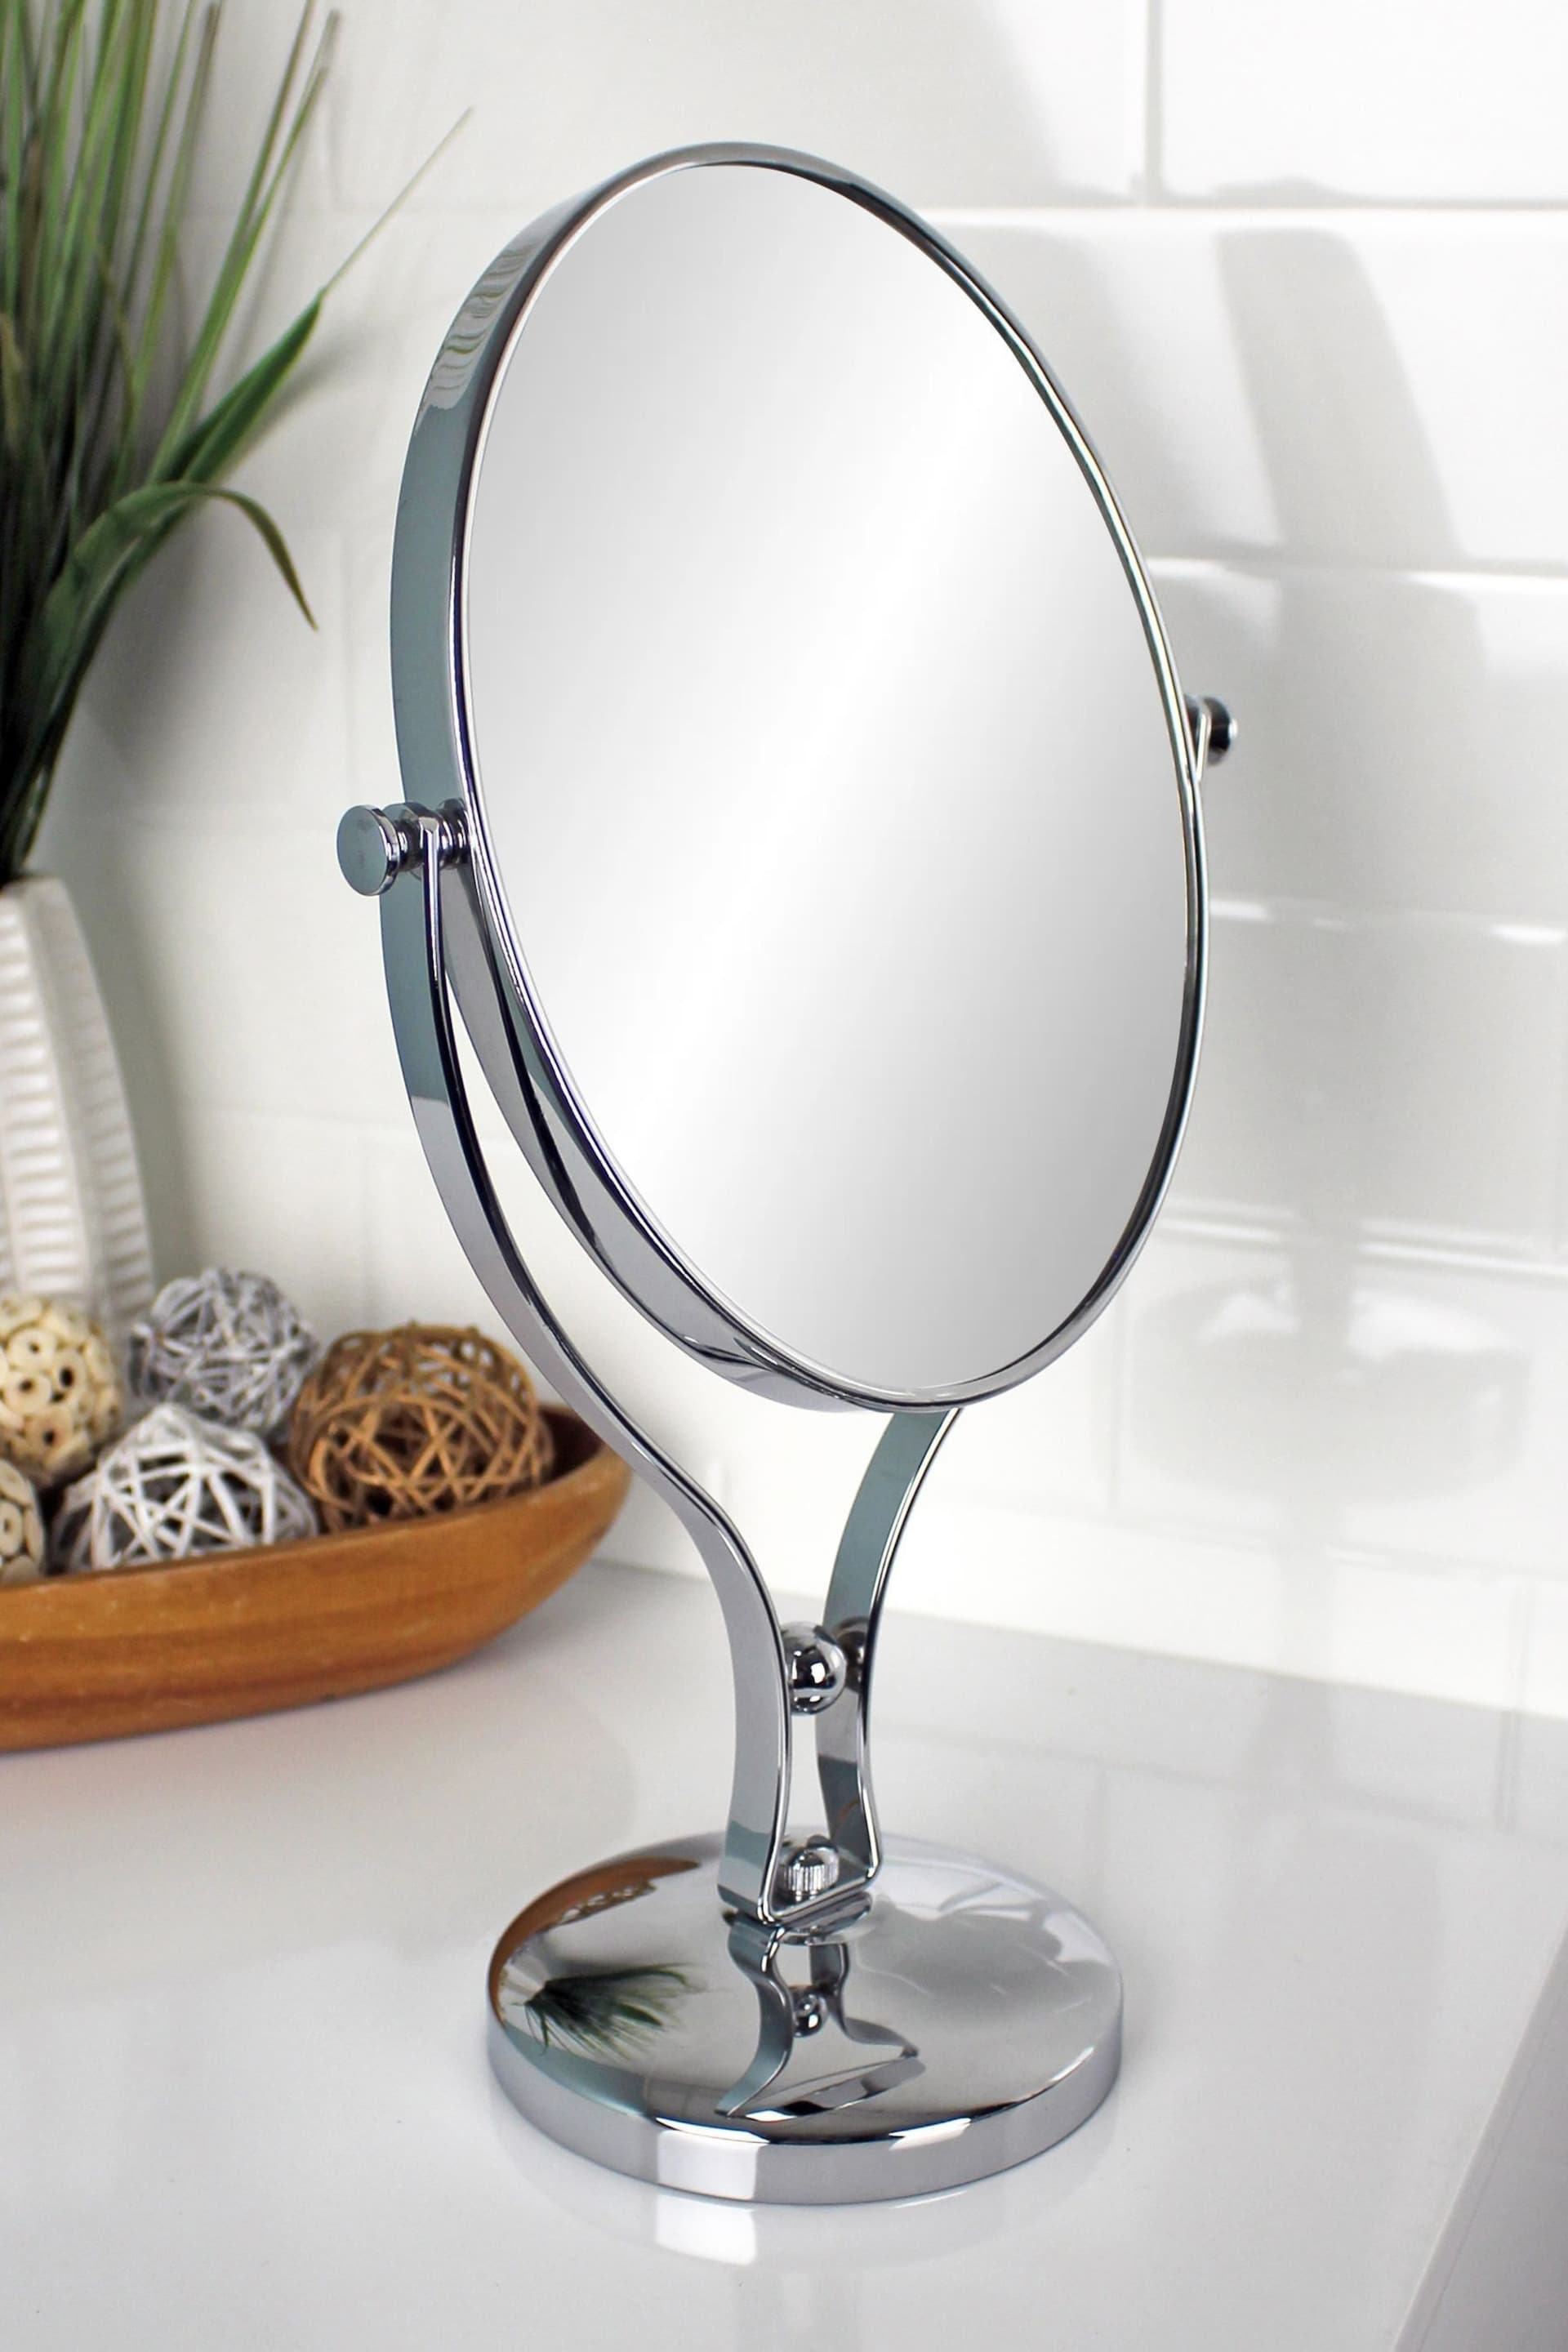 Showerdrape Chrome Vanity Mirror Oval 5x Magnification Reversableb Triton - Image 1 of 2